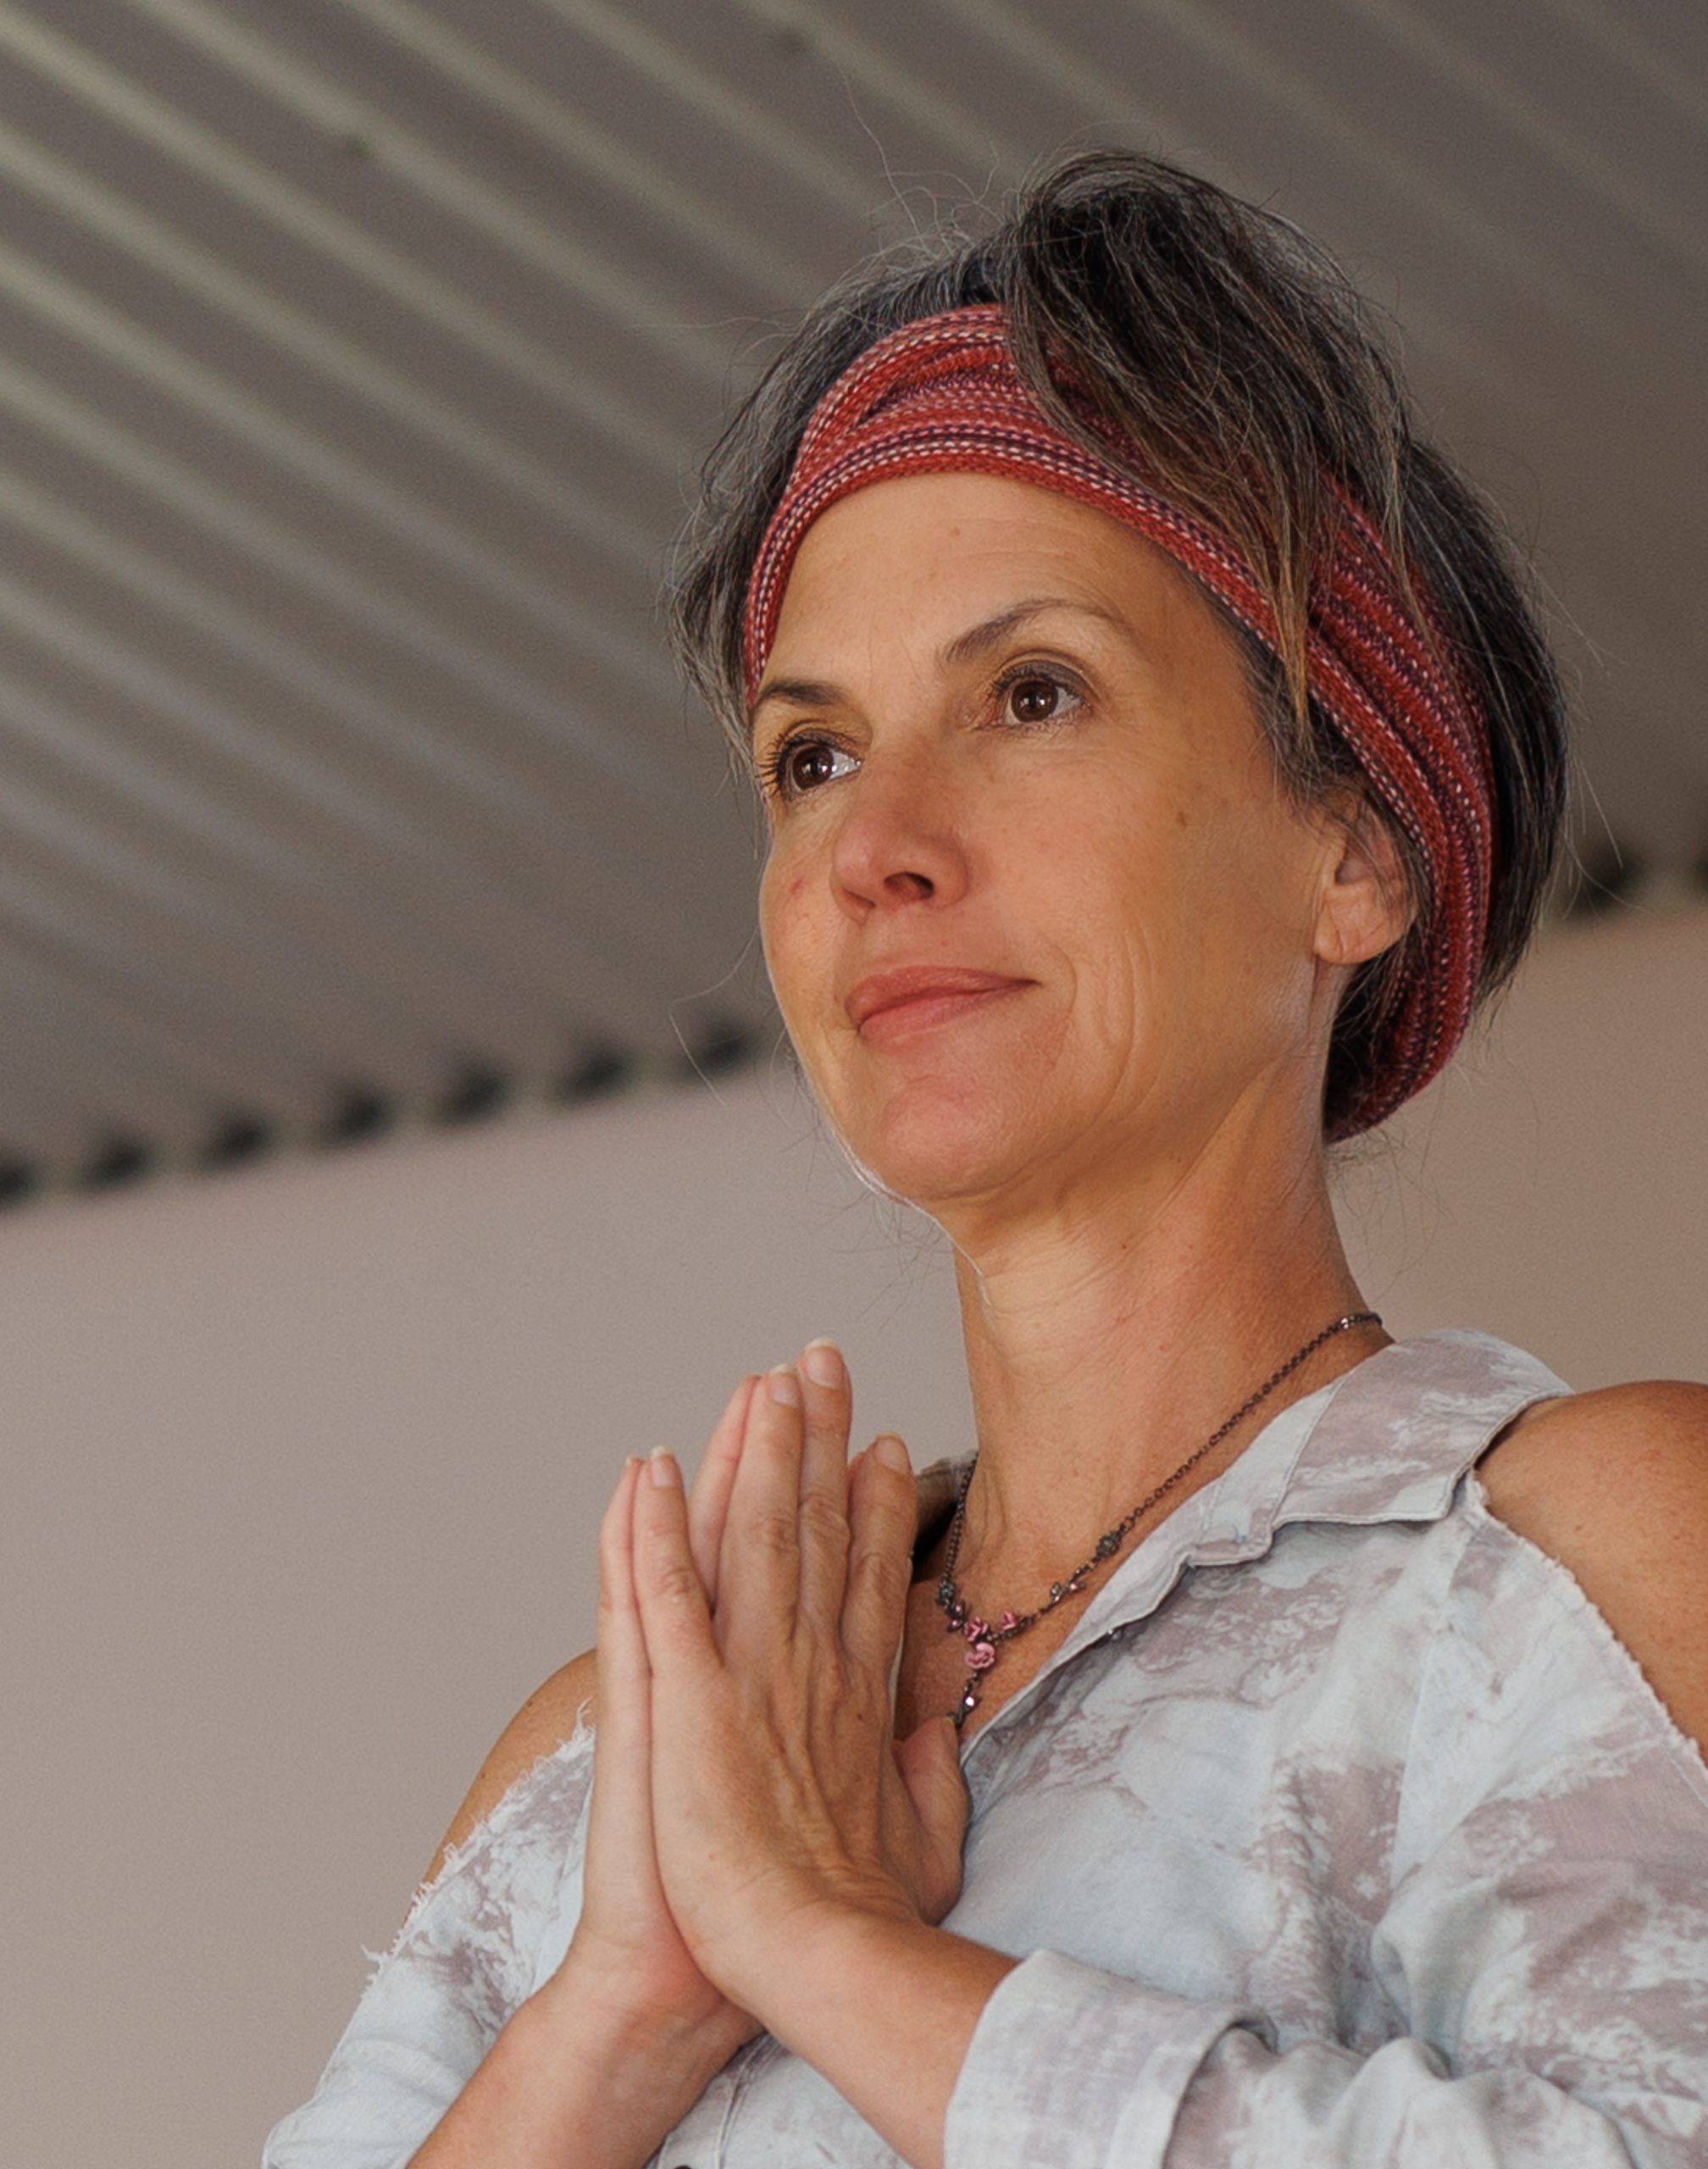 Jenny Yoga teacher & Yoga therapist